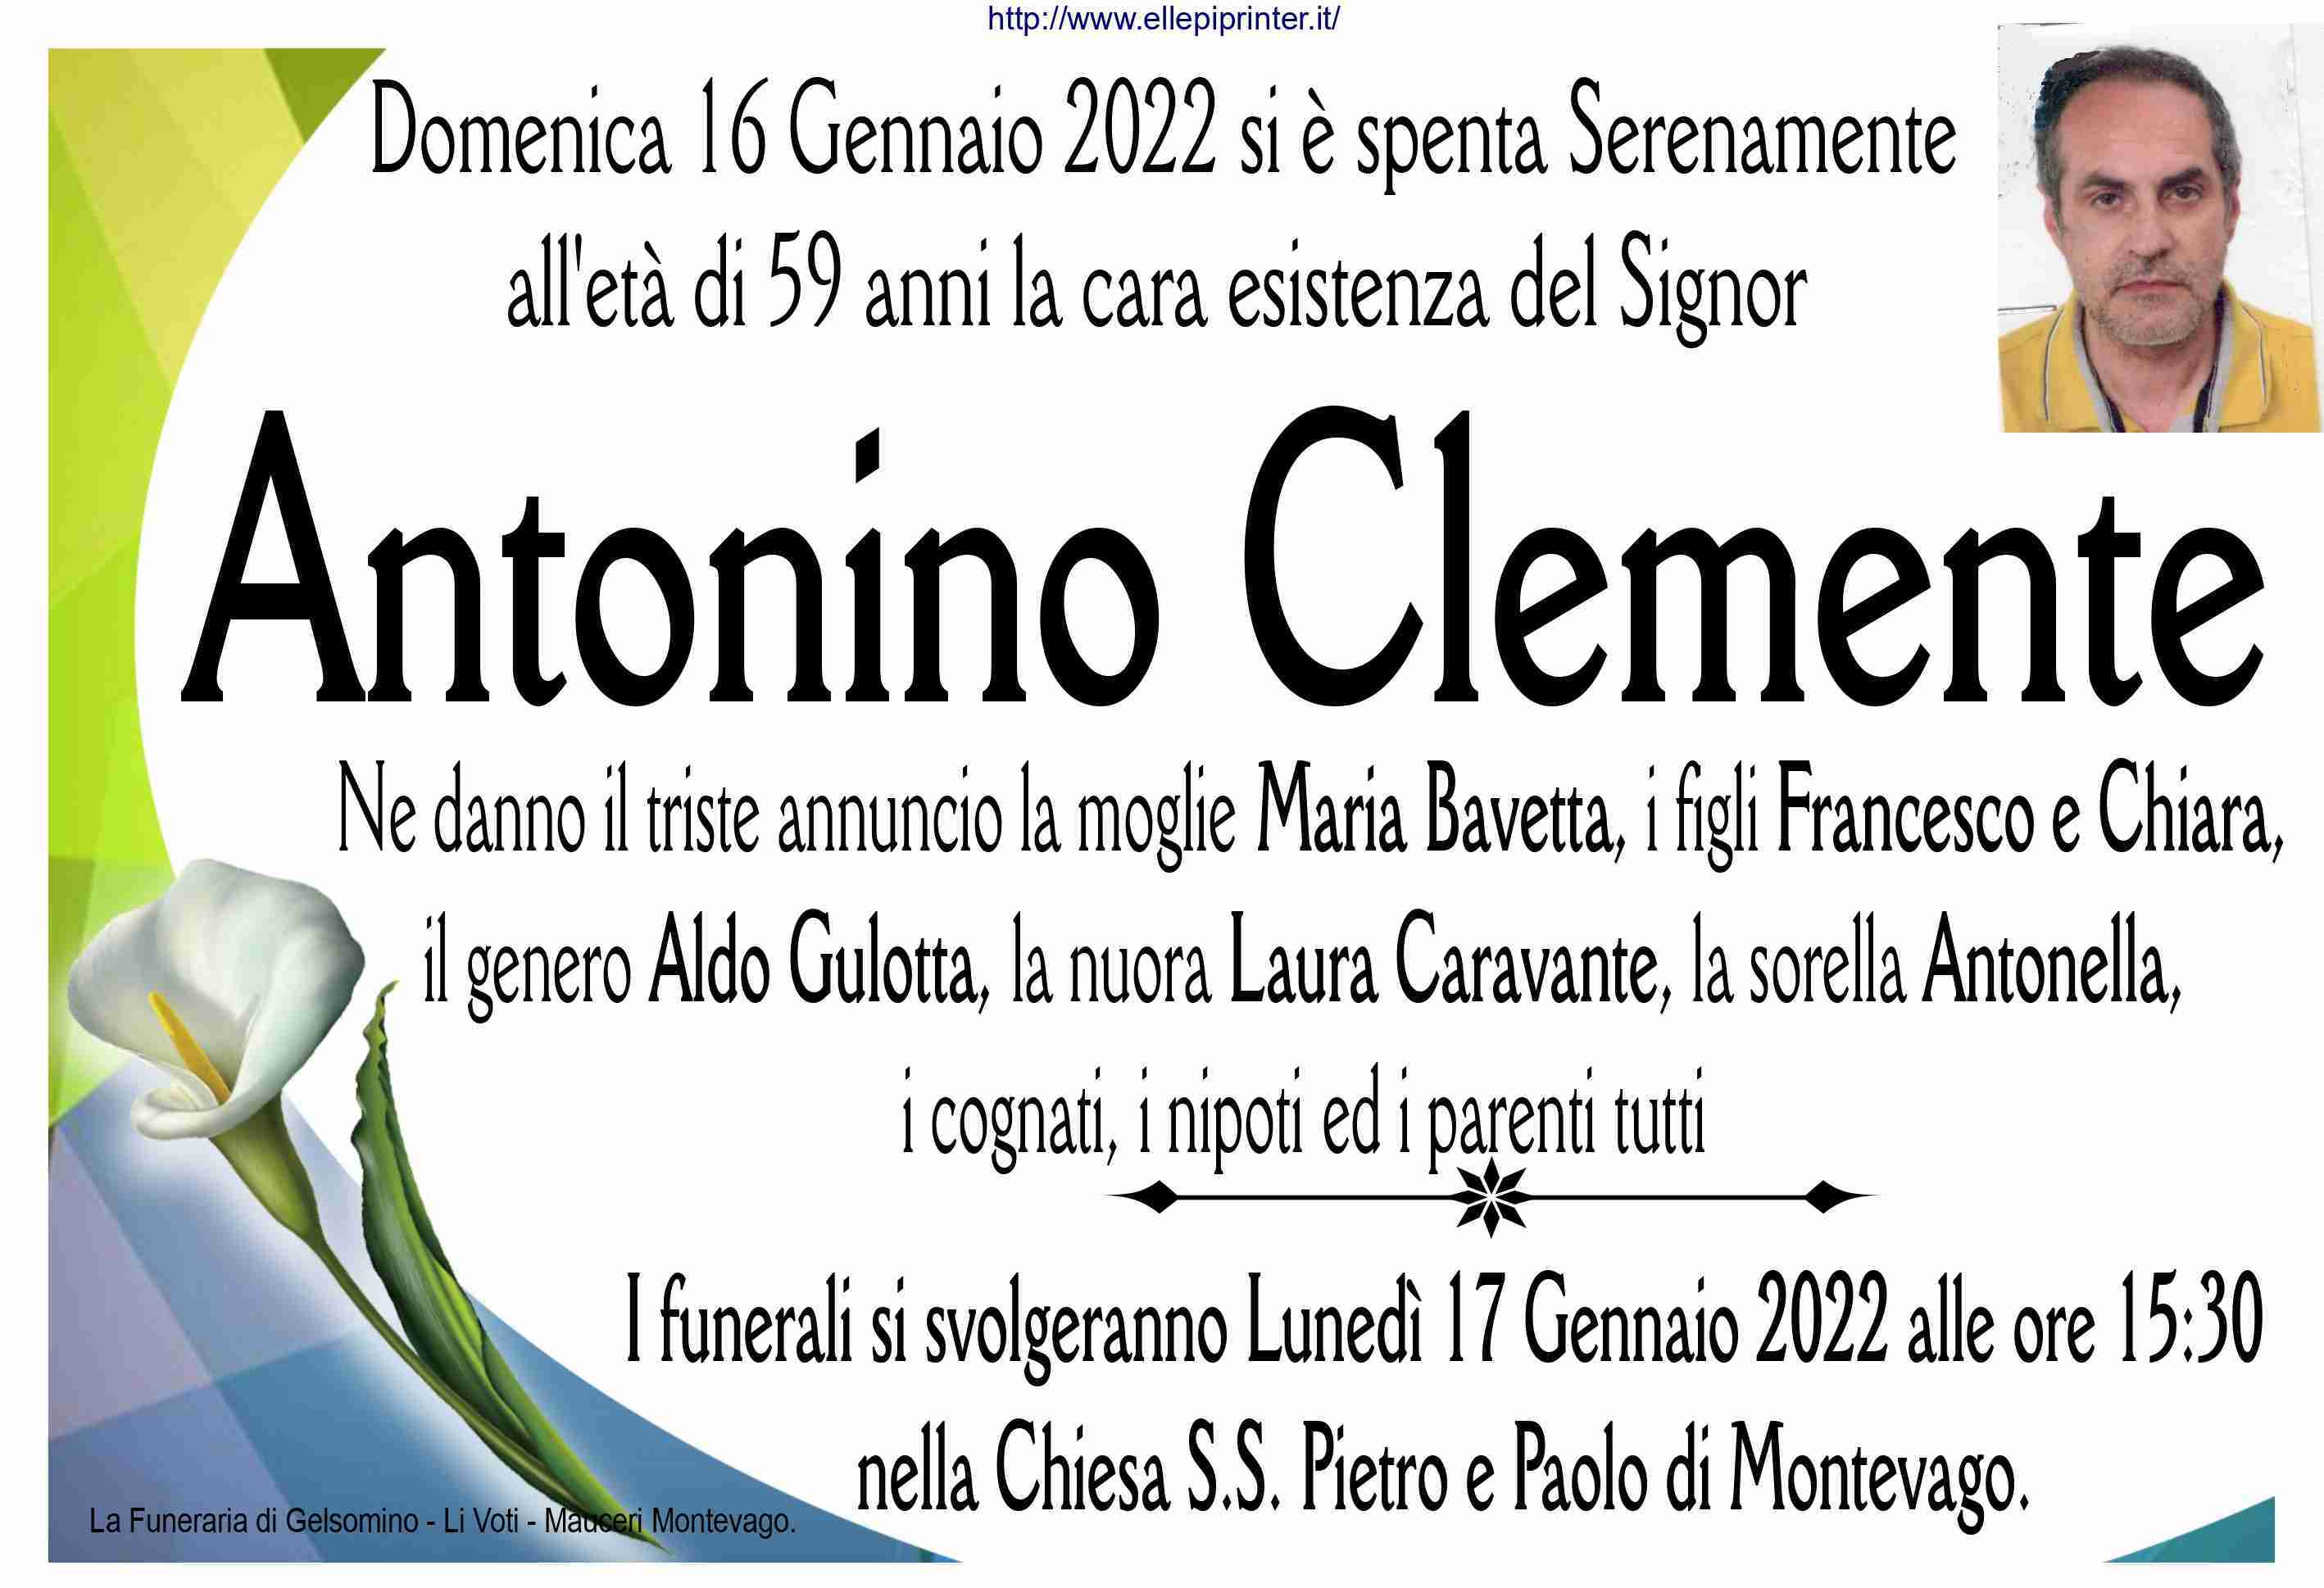 Antonino Clemente